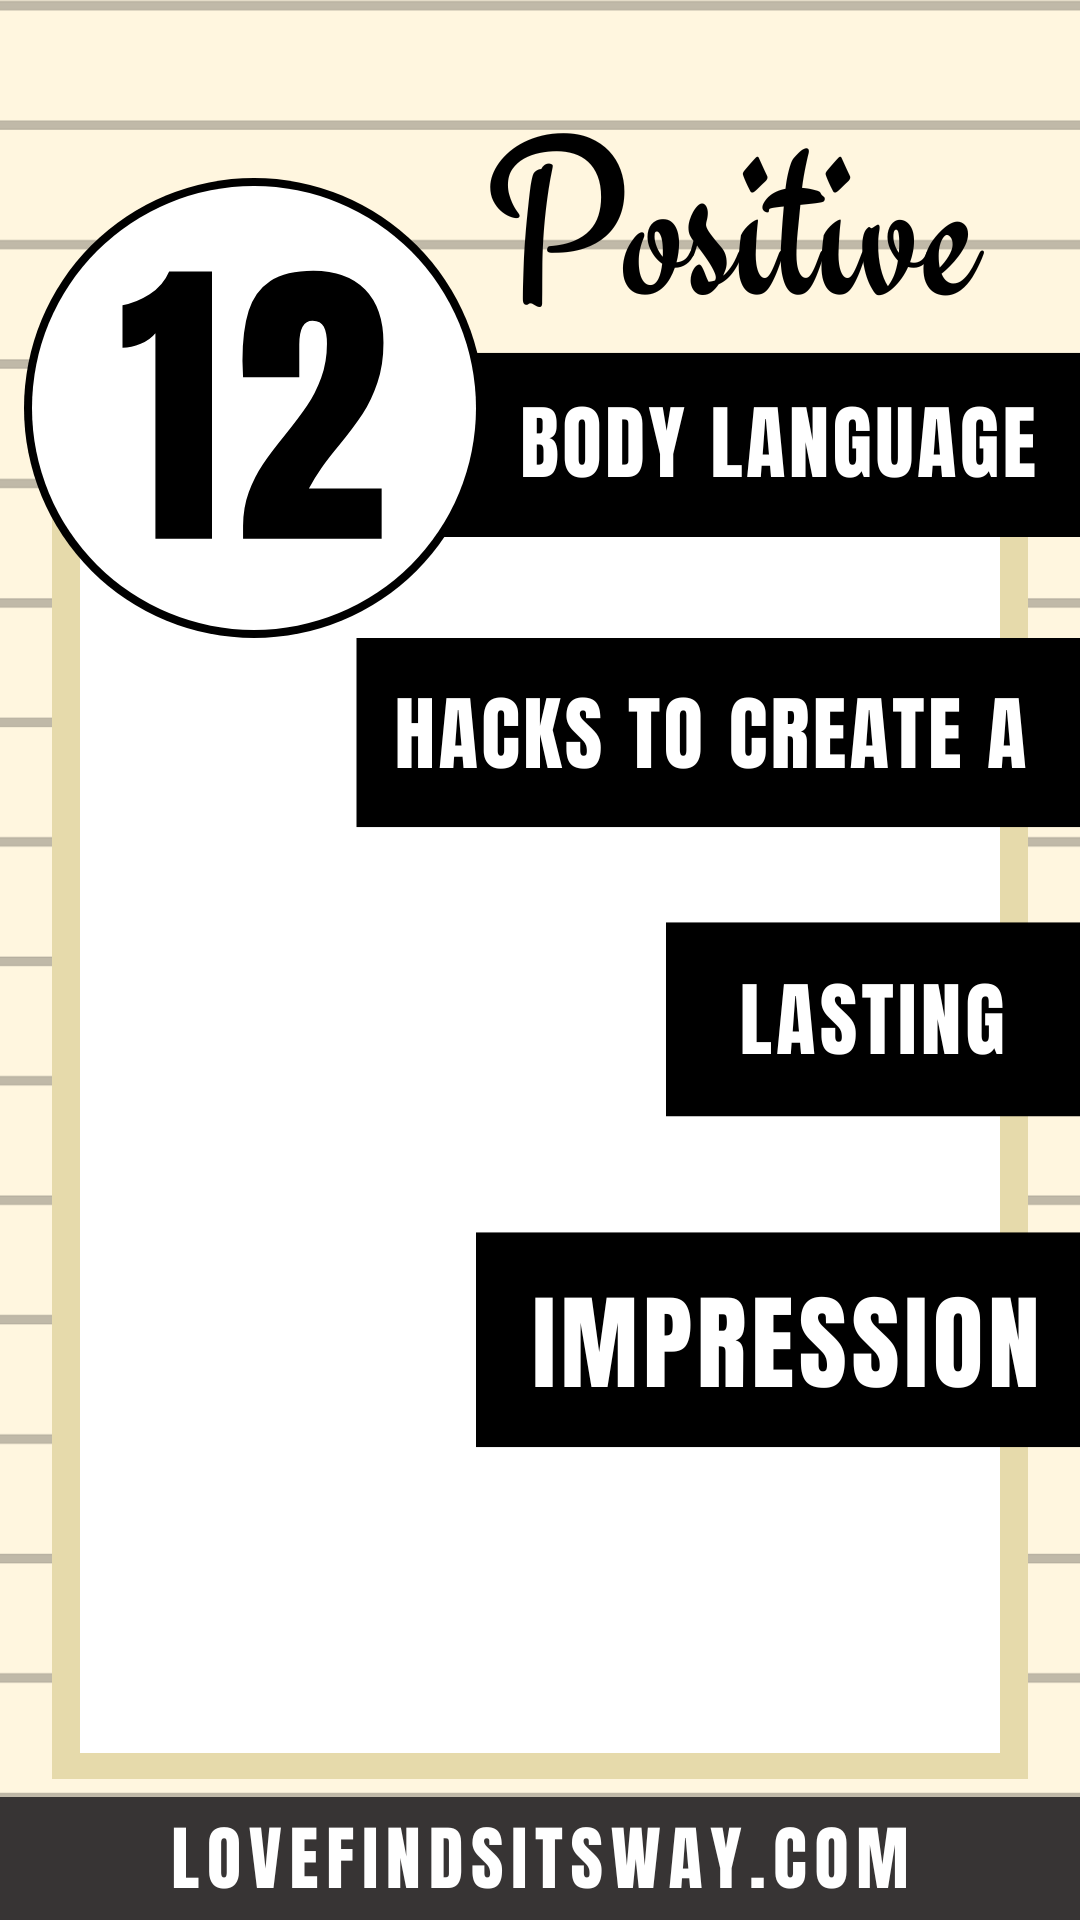 12-Smart-Positive-Body-Language-Hacks-To-Create-a-Lasting-Impression